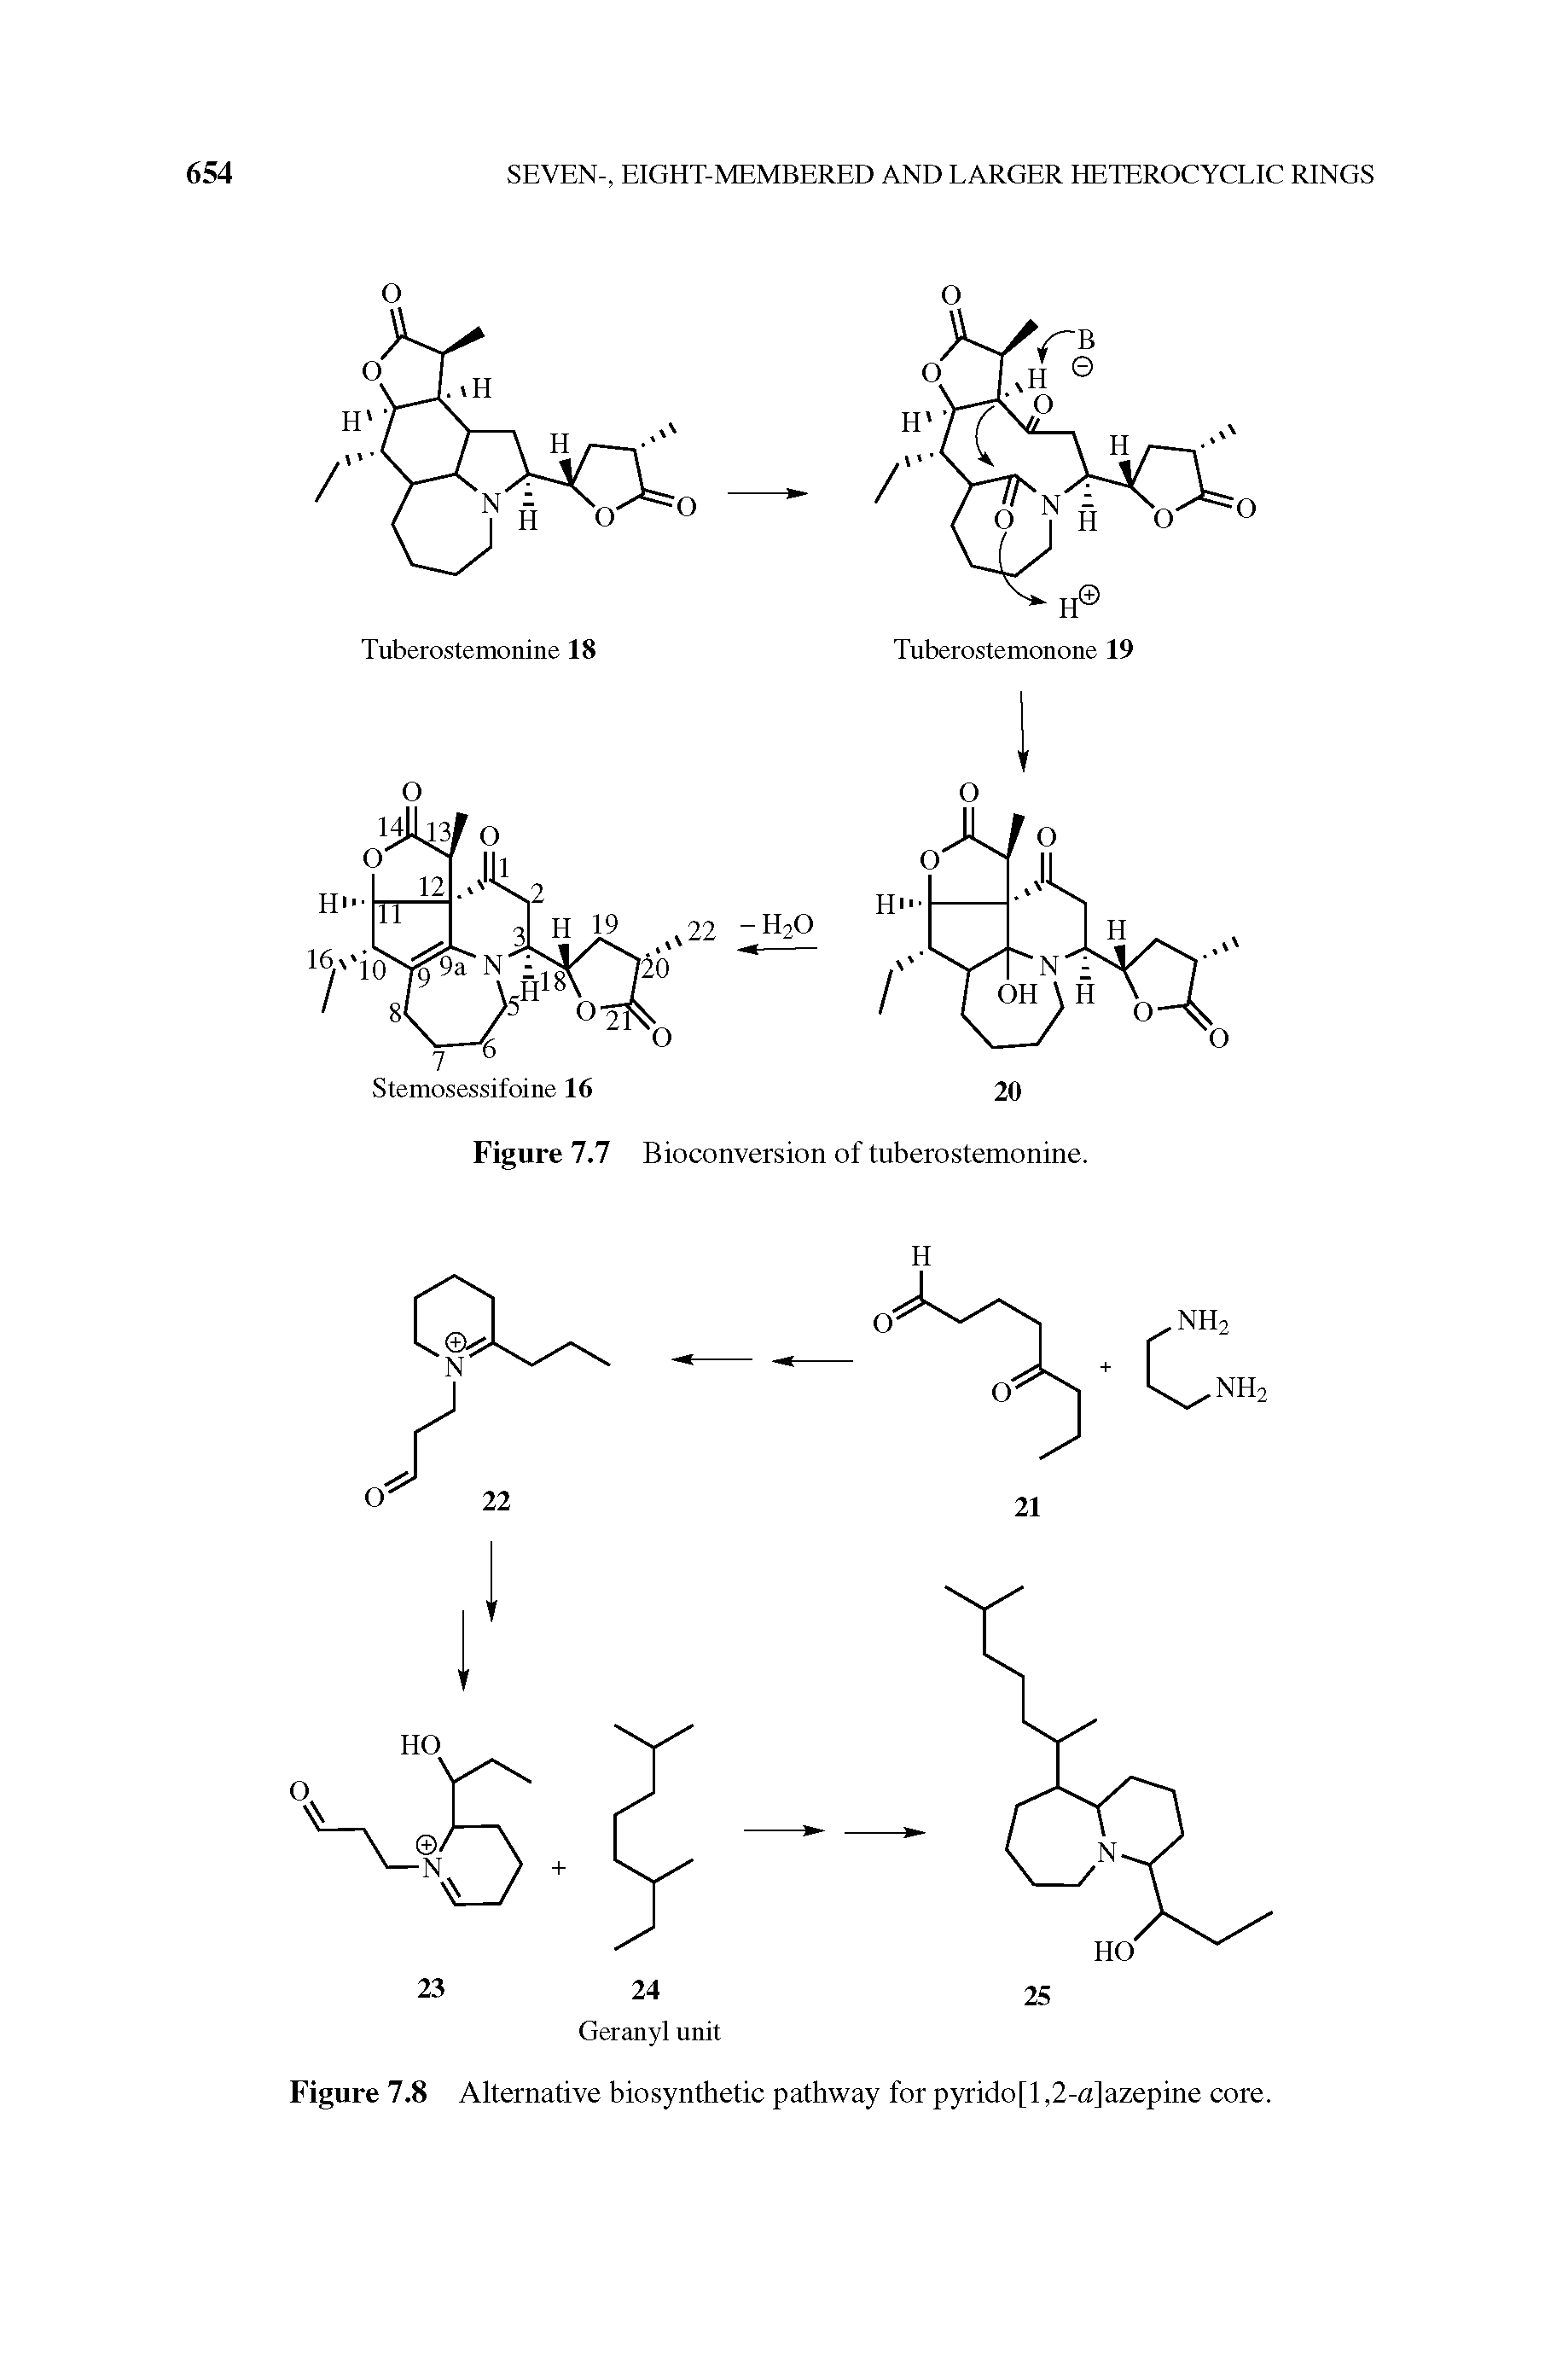 Figure 7.8 Alternative biosynthetic pathway for pyrido[l,2-a]azepine core.